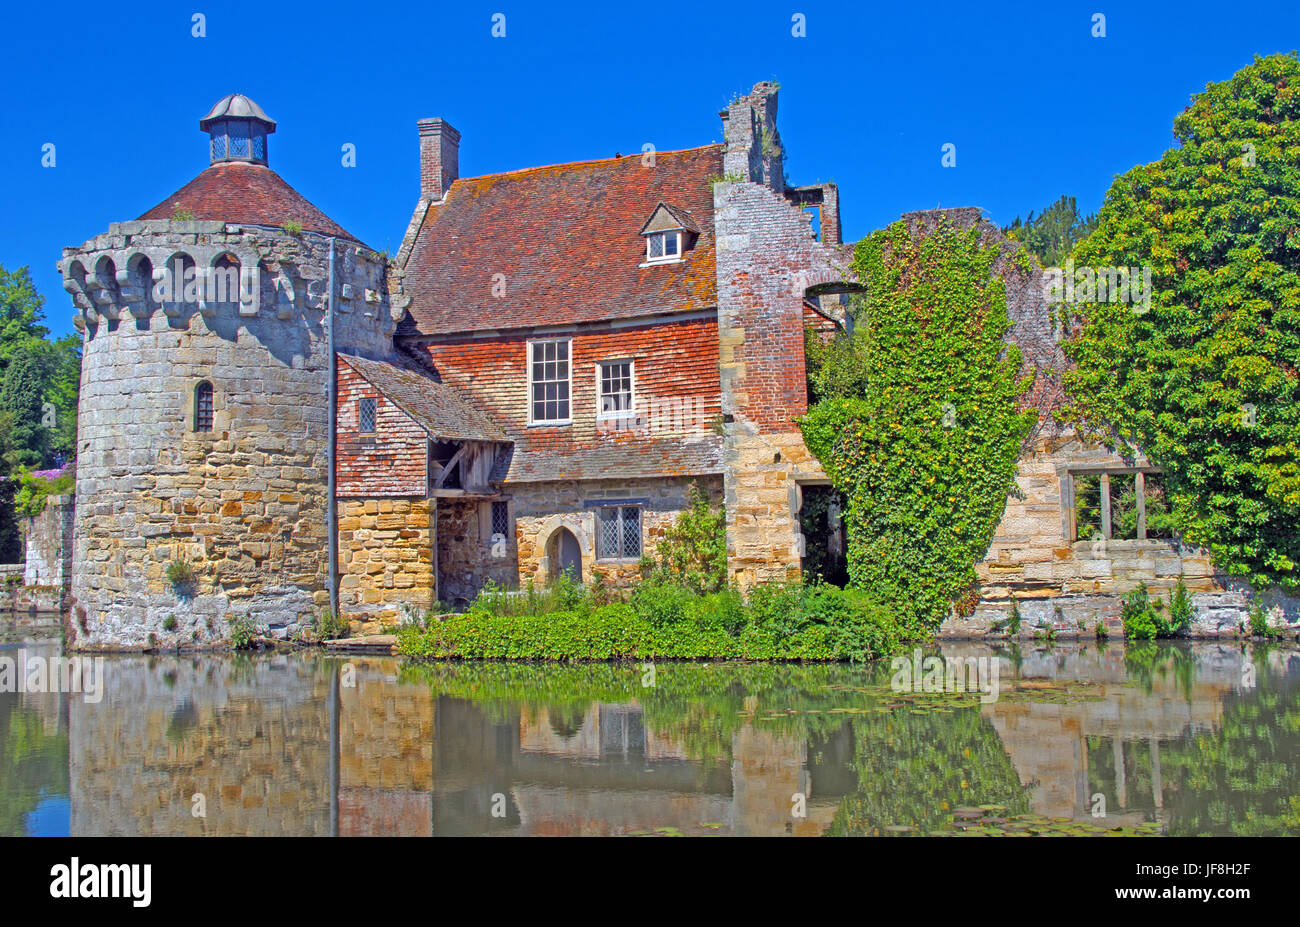 Old Scotney Medieval Castle, Lake , Lamberhurst, Kent Stock Photo